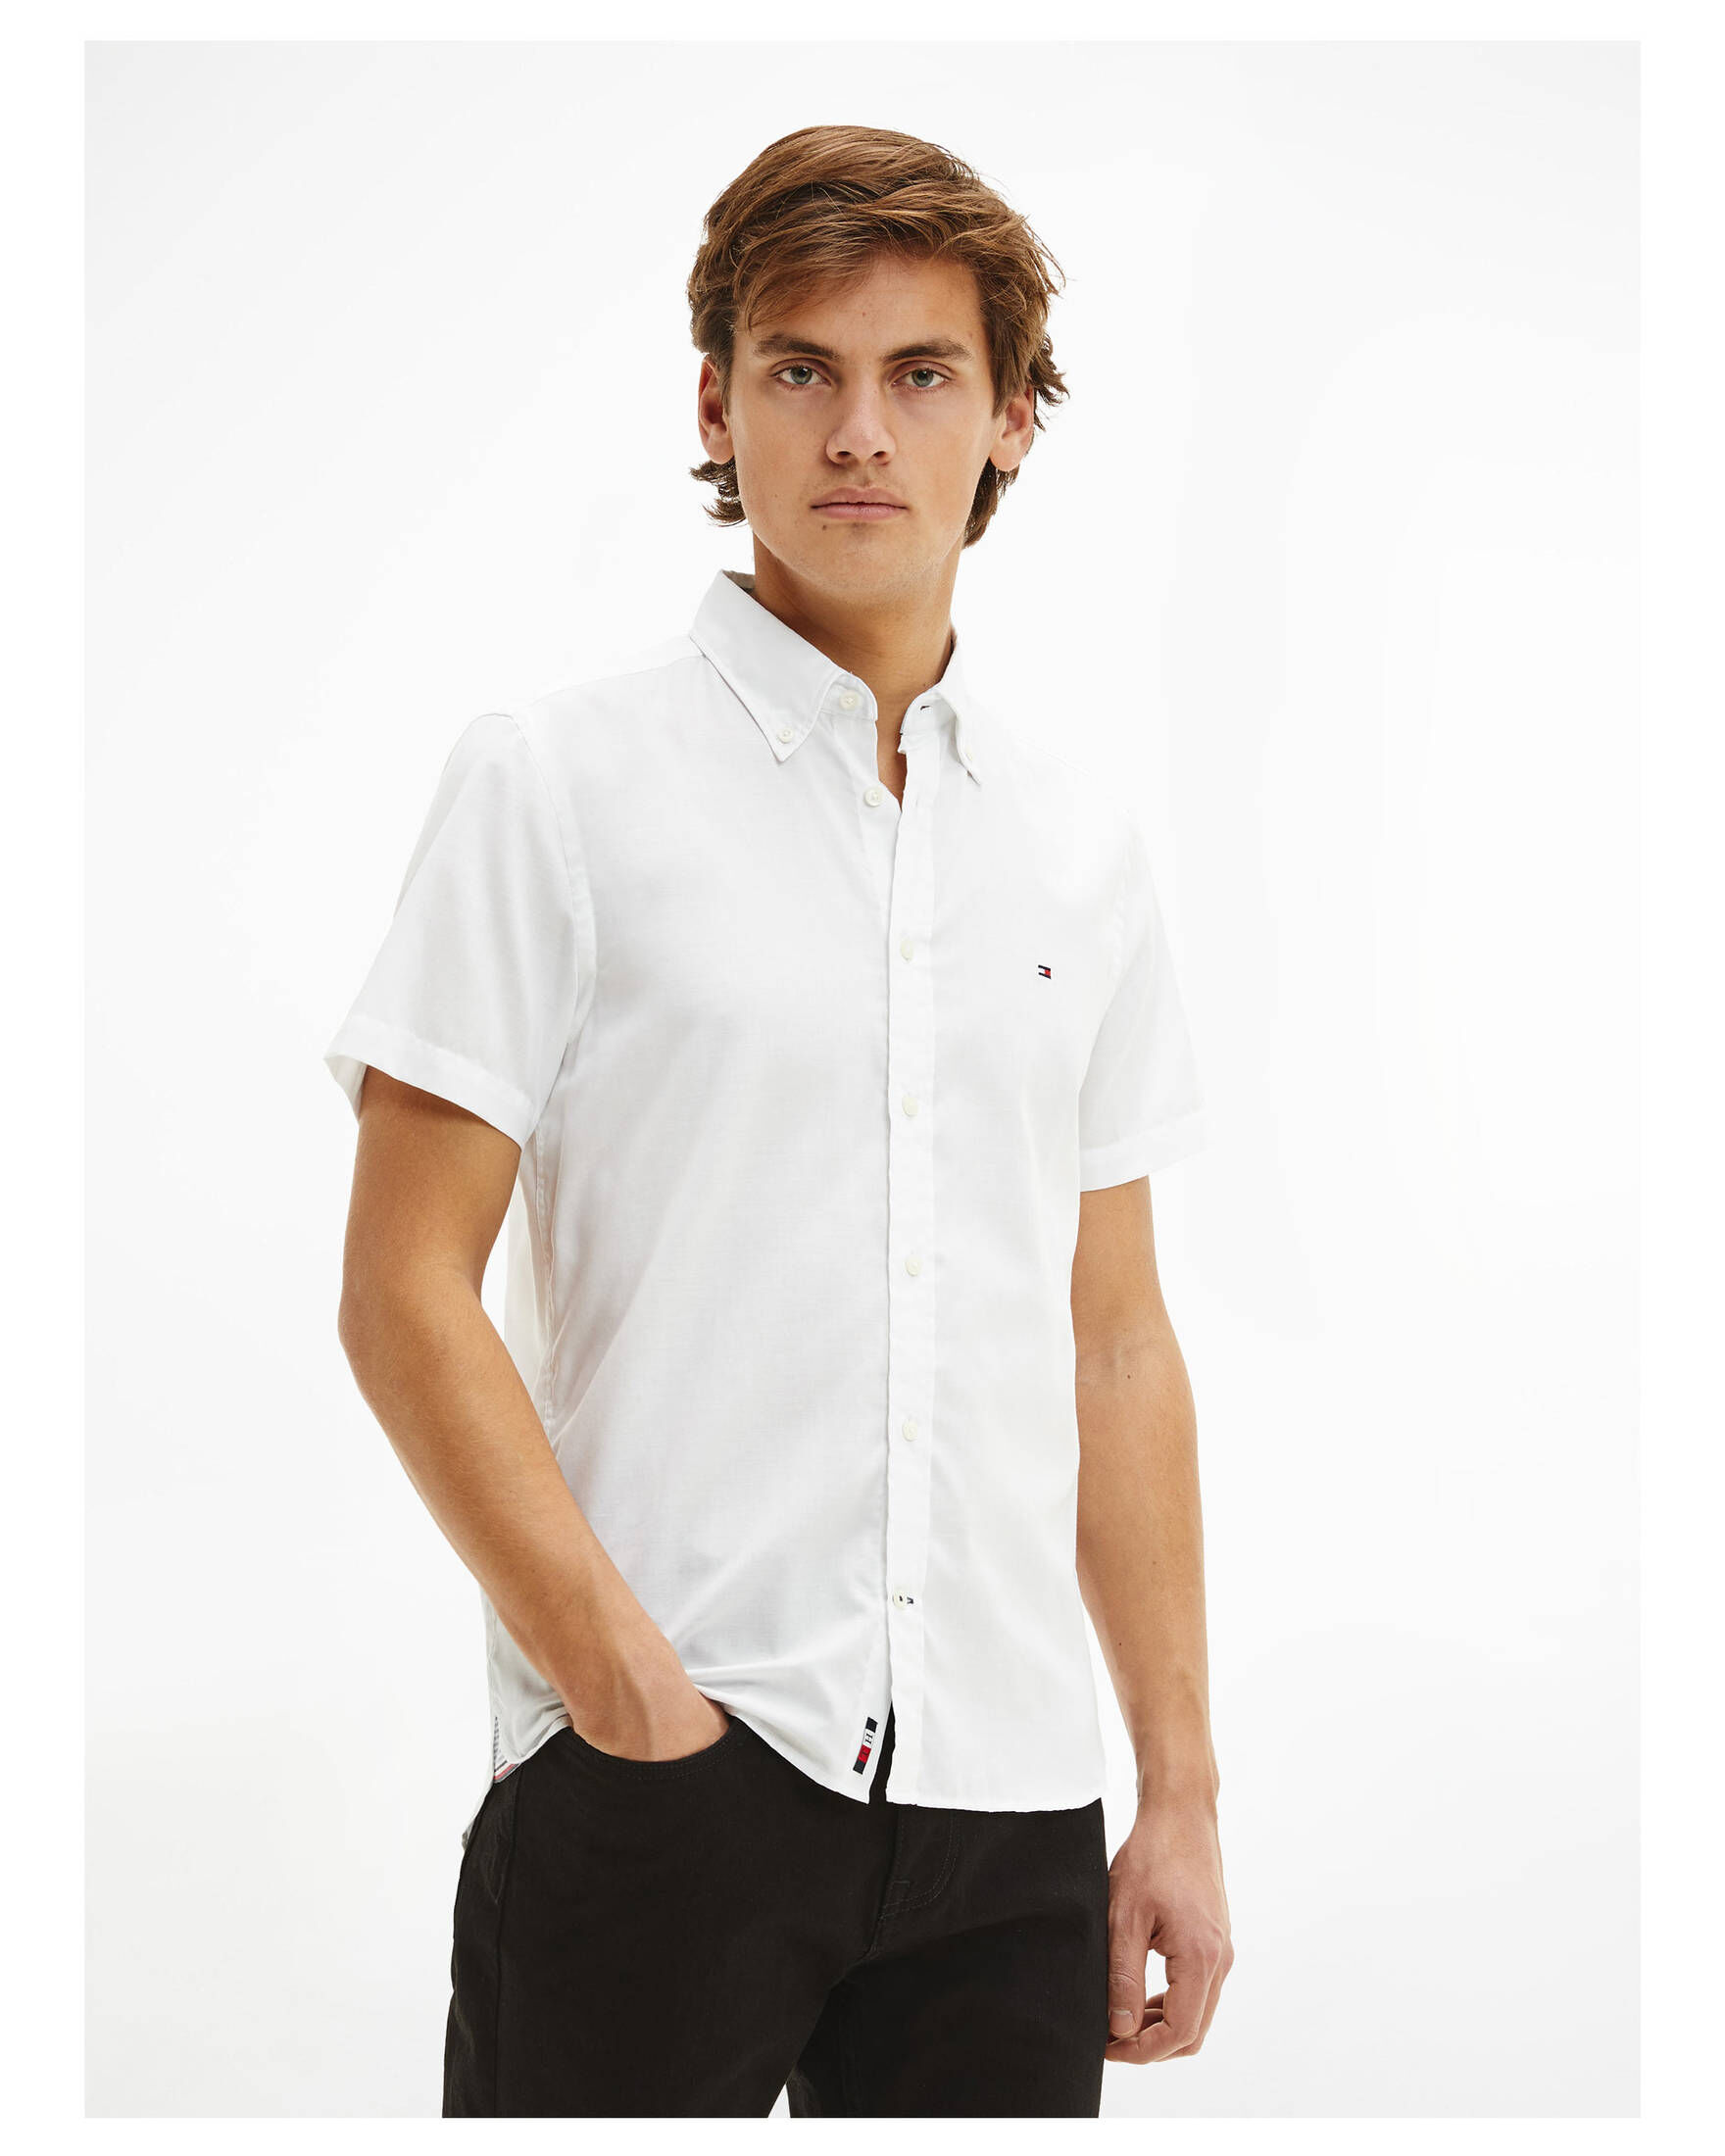 wijsvinger schoorsteen Let op Tommy Hilfiger Herren Hemd "Slim Travel Oxford Shirt" Slim Fit Kurzarm  kaufen | engelhorn